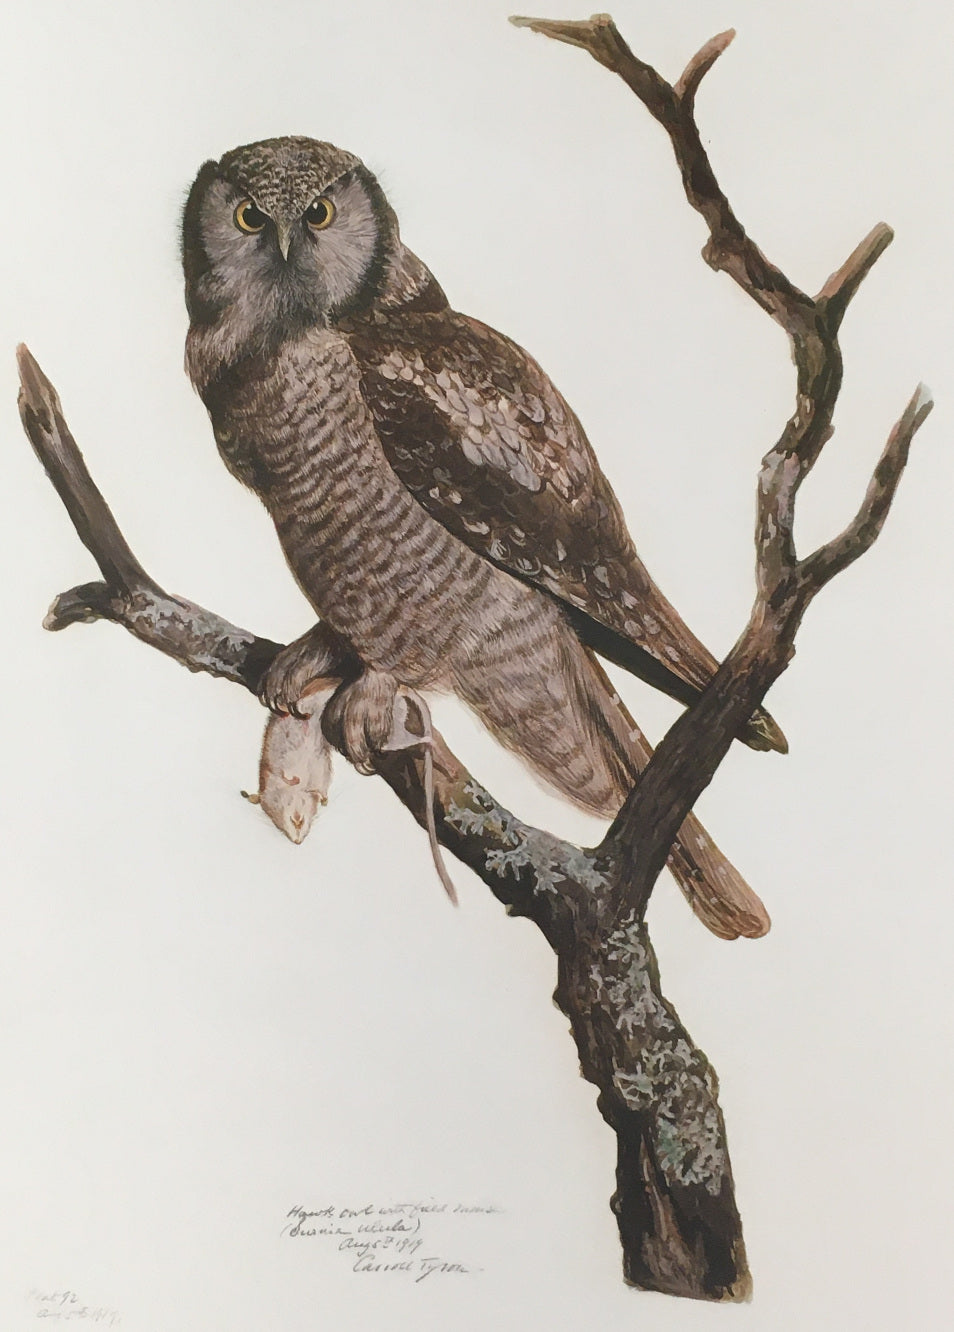 Tyson, Carroll  “Hawk Owl with Field Mouse” Plate 92